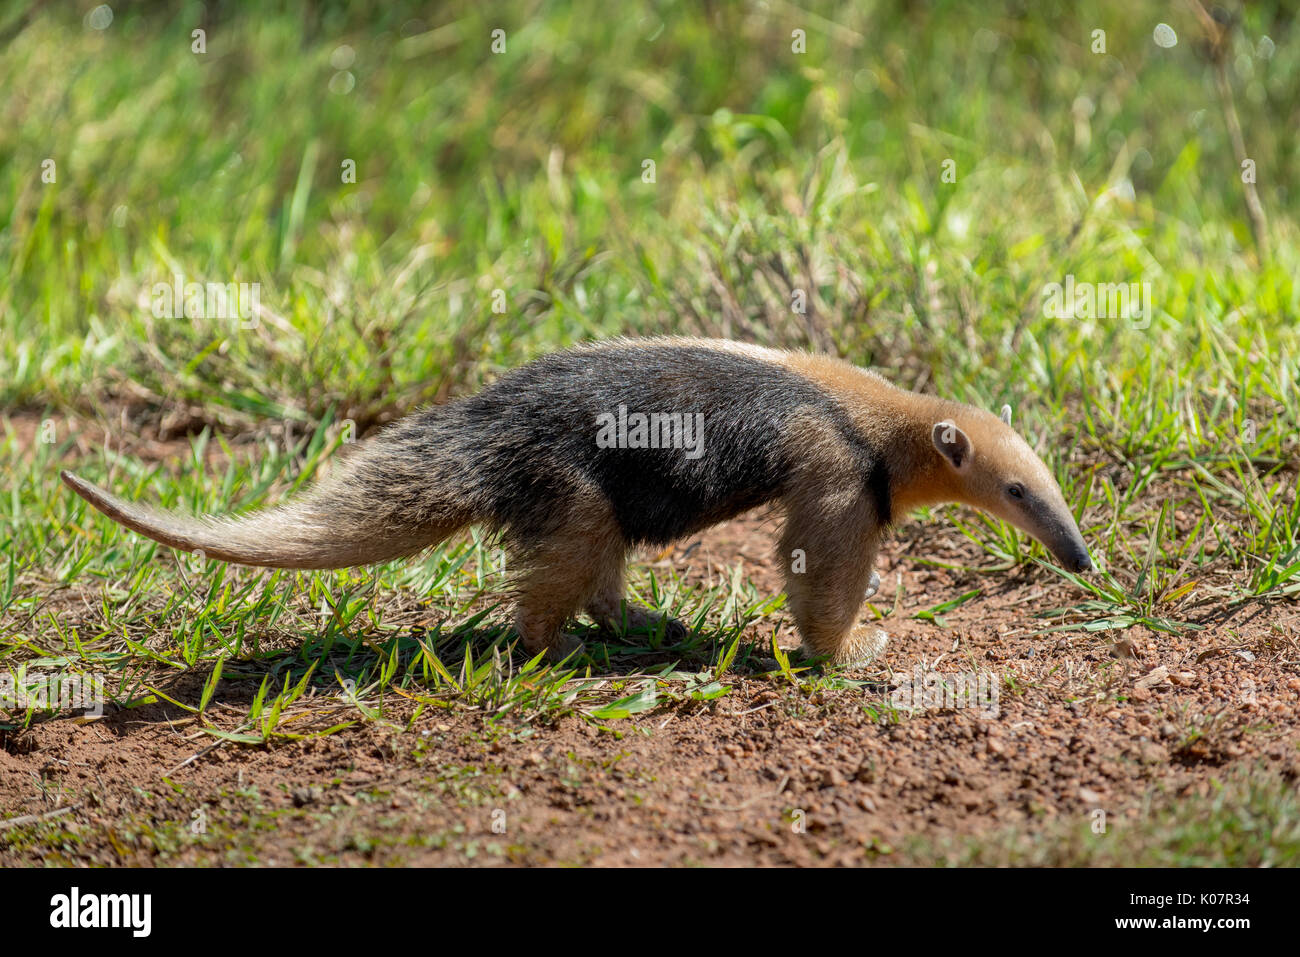 Southern tamandua or collared anteater (Tamandua tetradactyla), Pantanal, Mato Grosso do Sul, Brazil Stock Photo